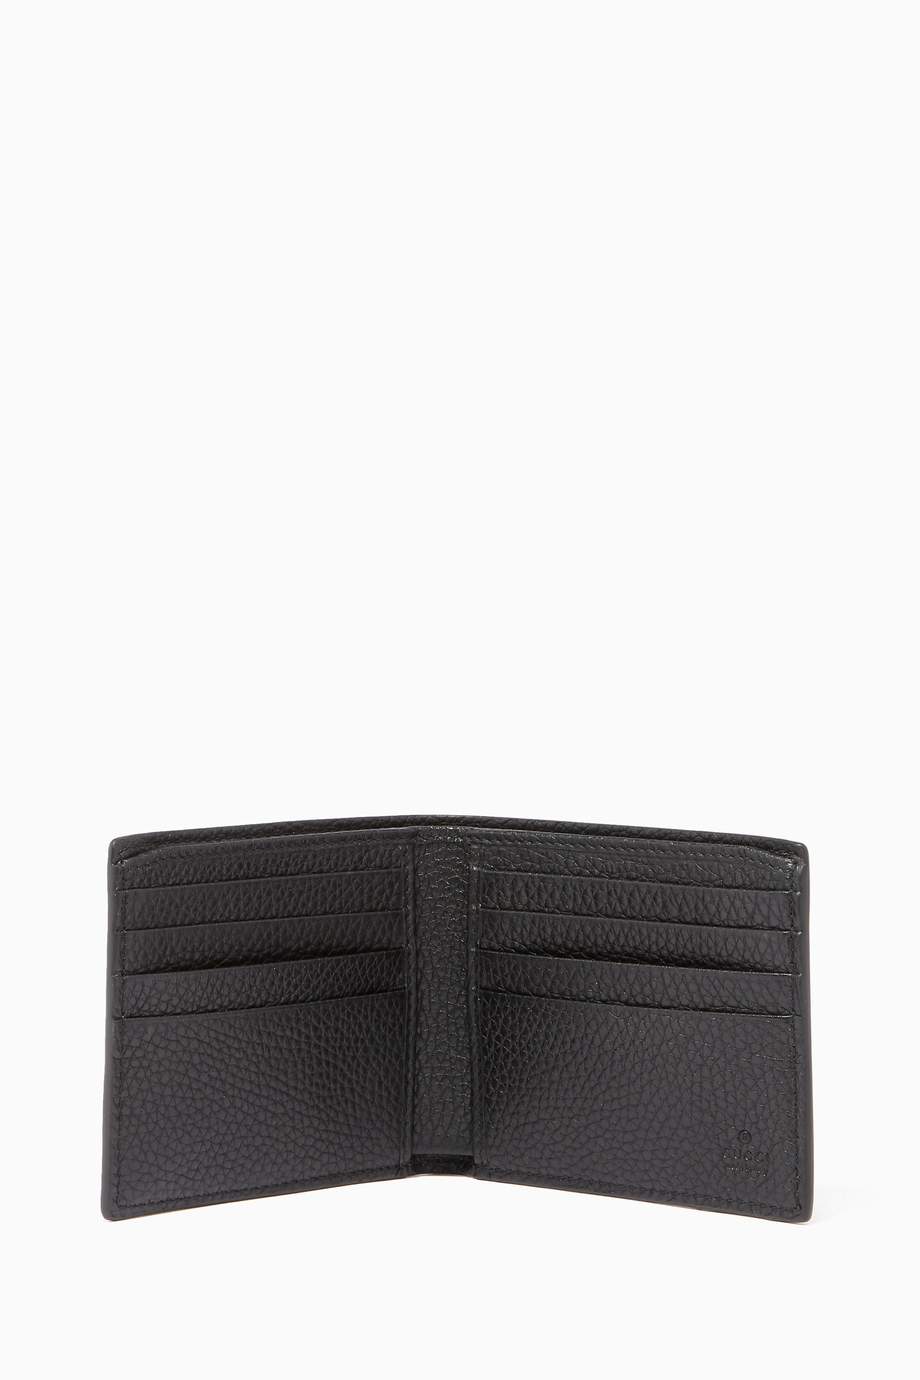 Shop Gucci Black Black Cellarius Leather Wallet for Men | Ounass UAE